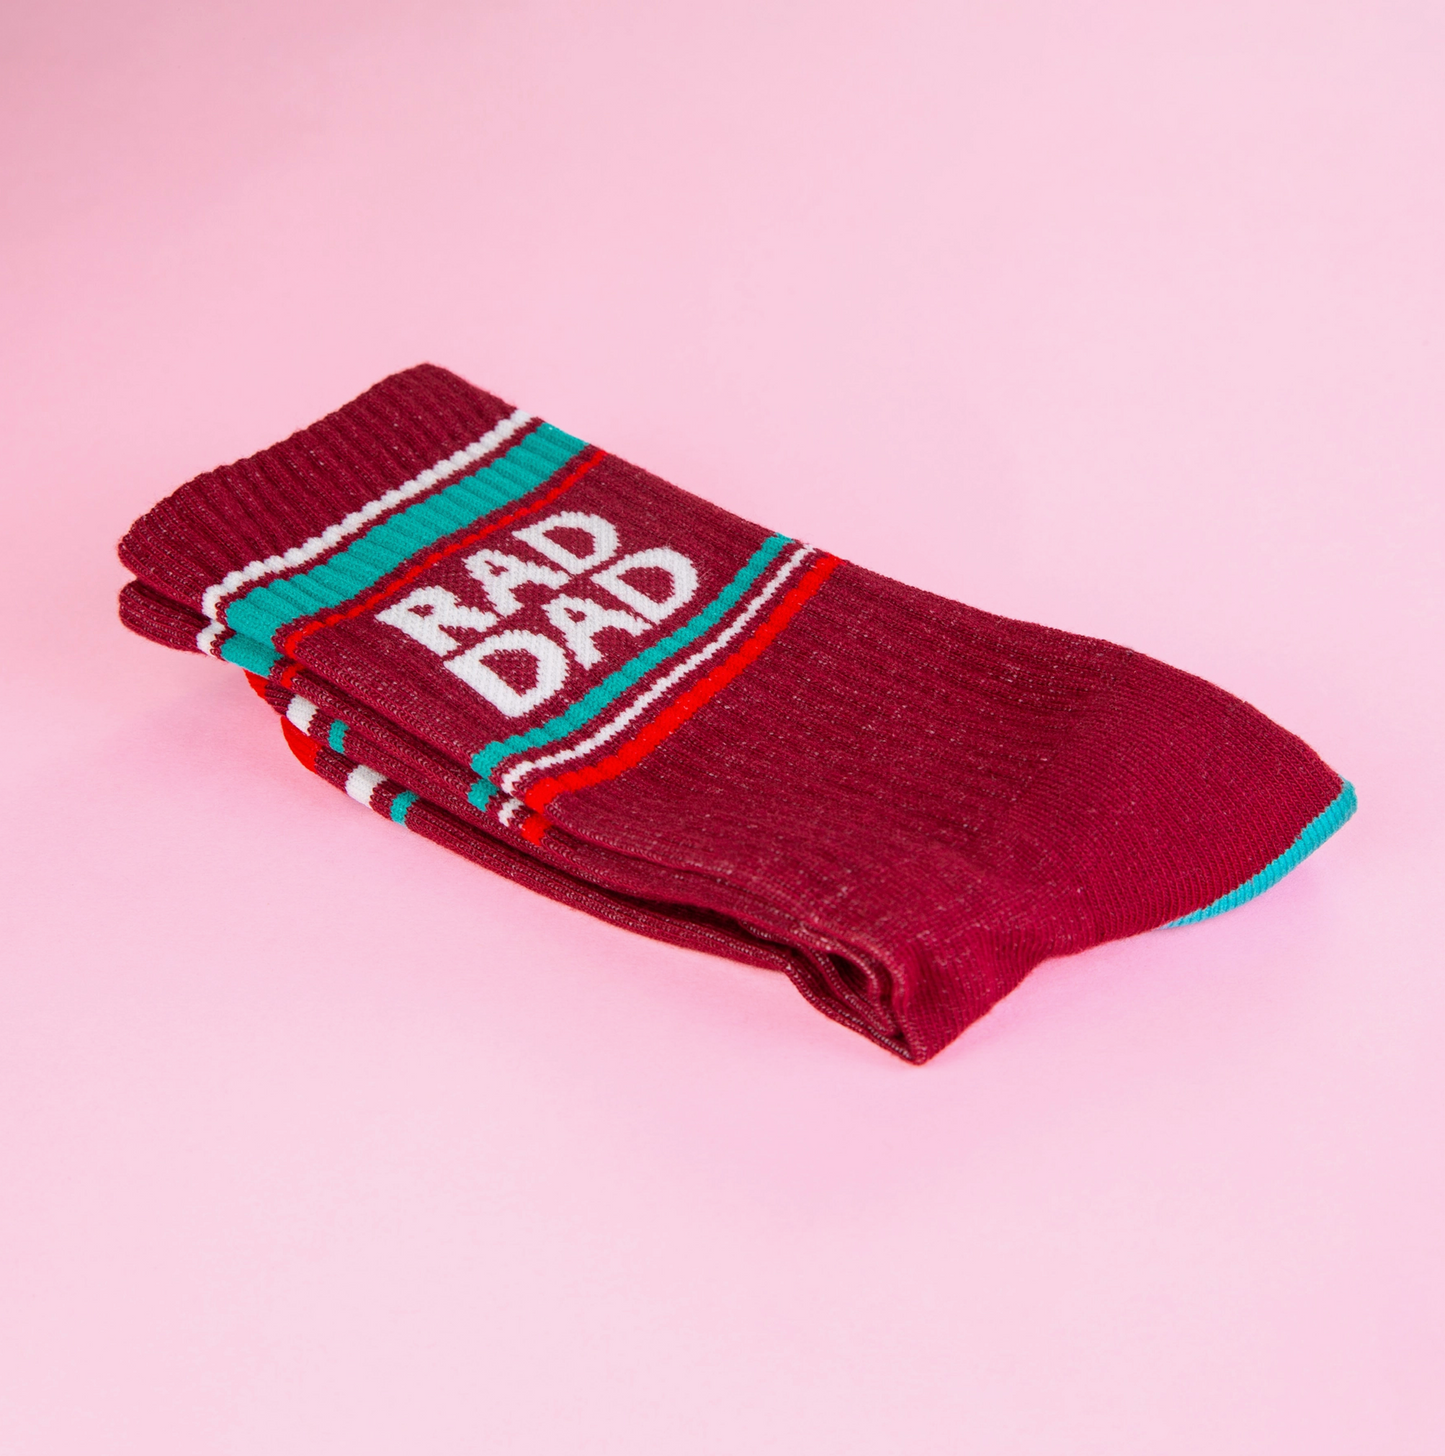 Rad Dad Socks